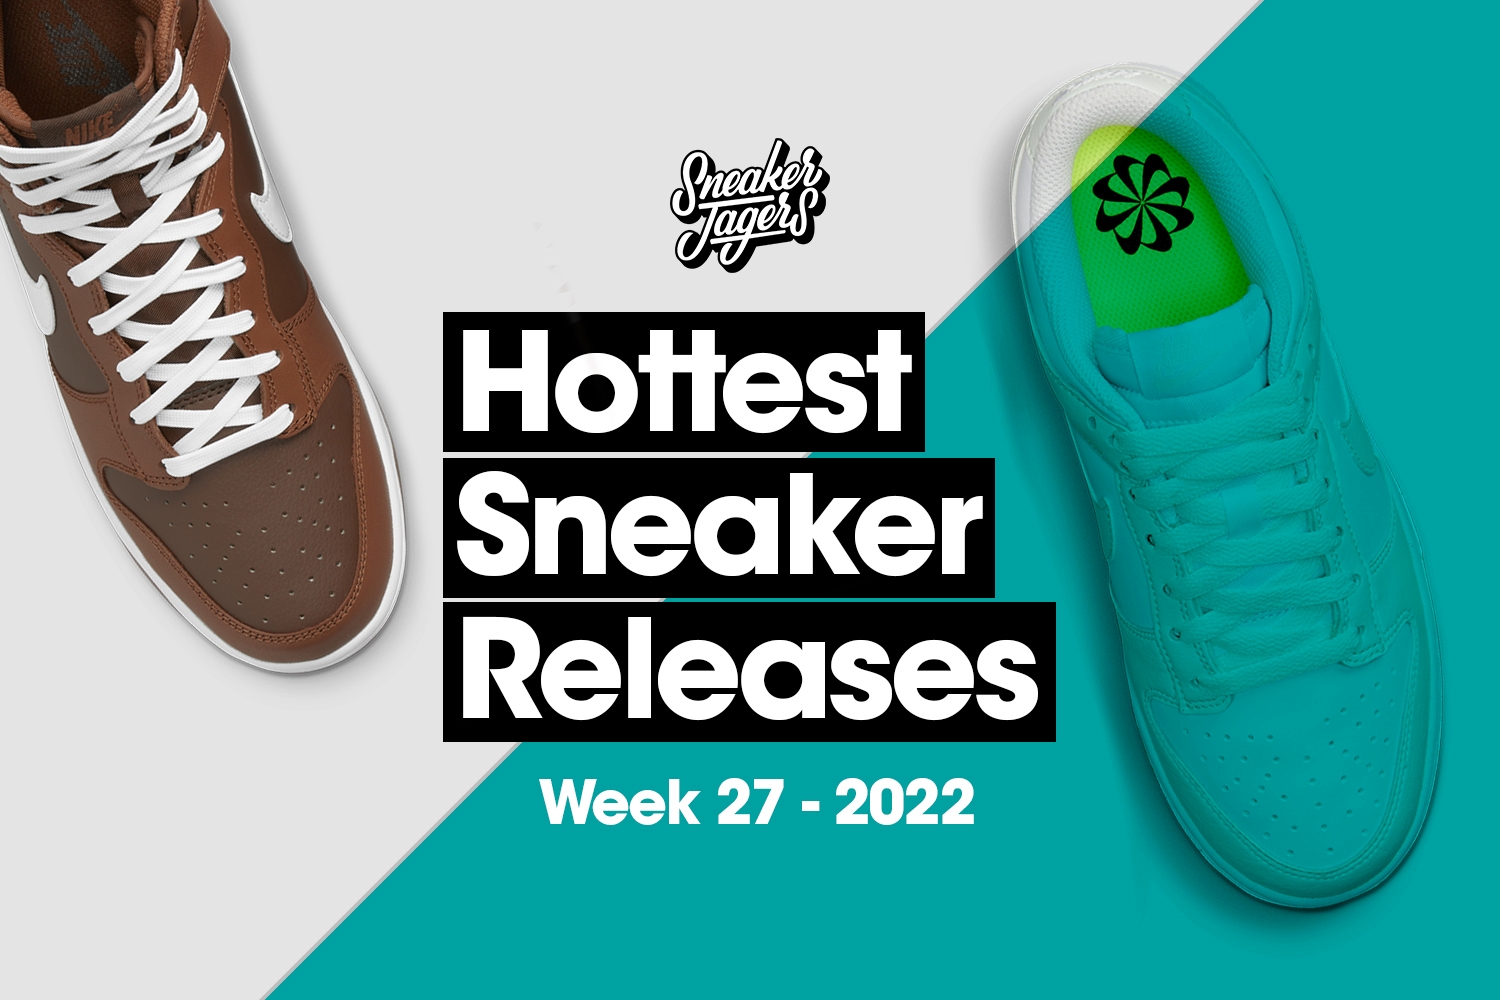 Hottest Sneaker Releases - week 27